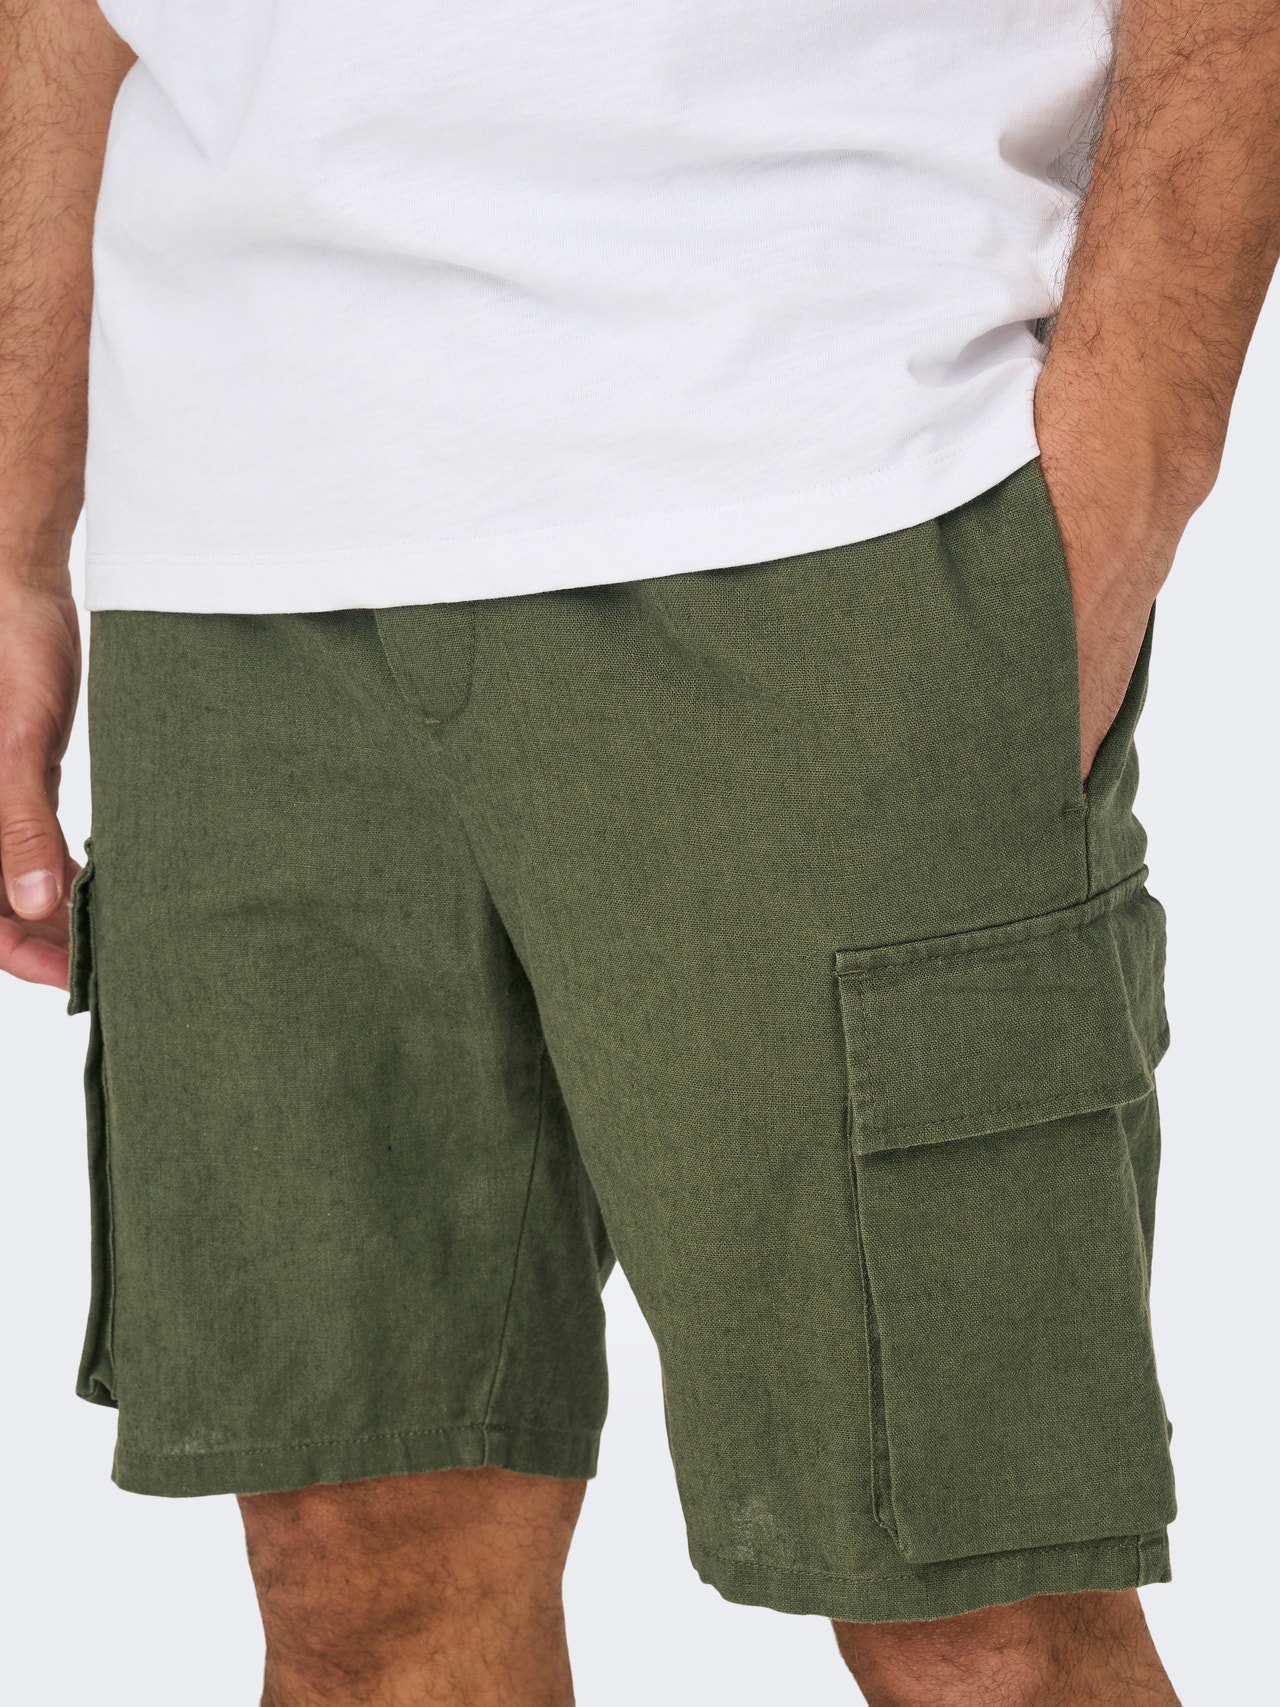 Curvy Athletic Pocket Shorts-DK Olive